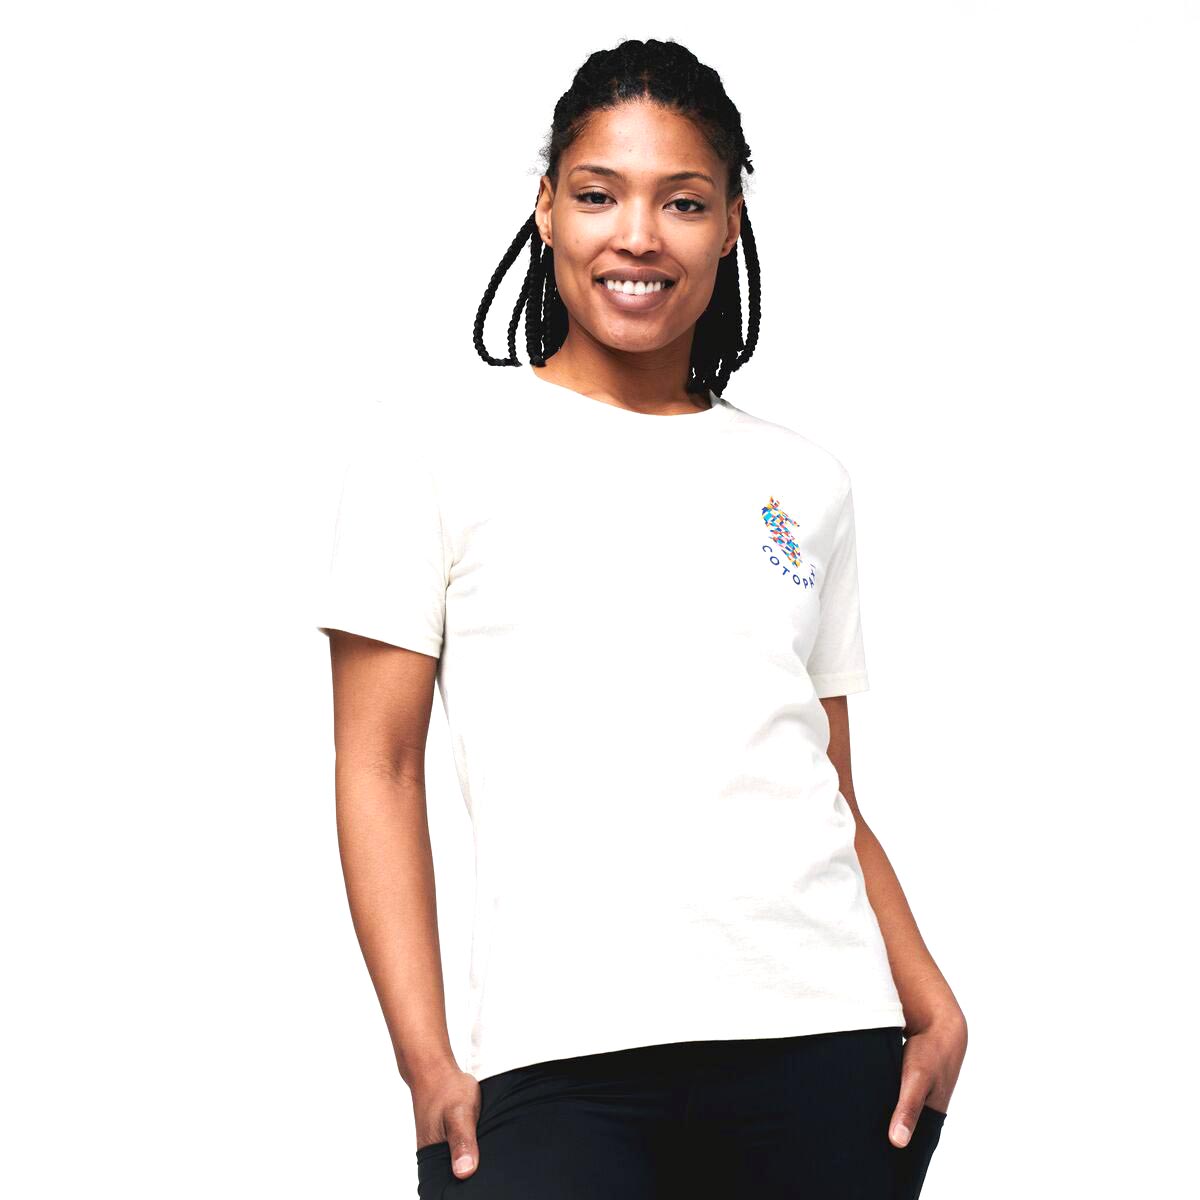 Cotopaxi Women's Llama Lover T-Shirt